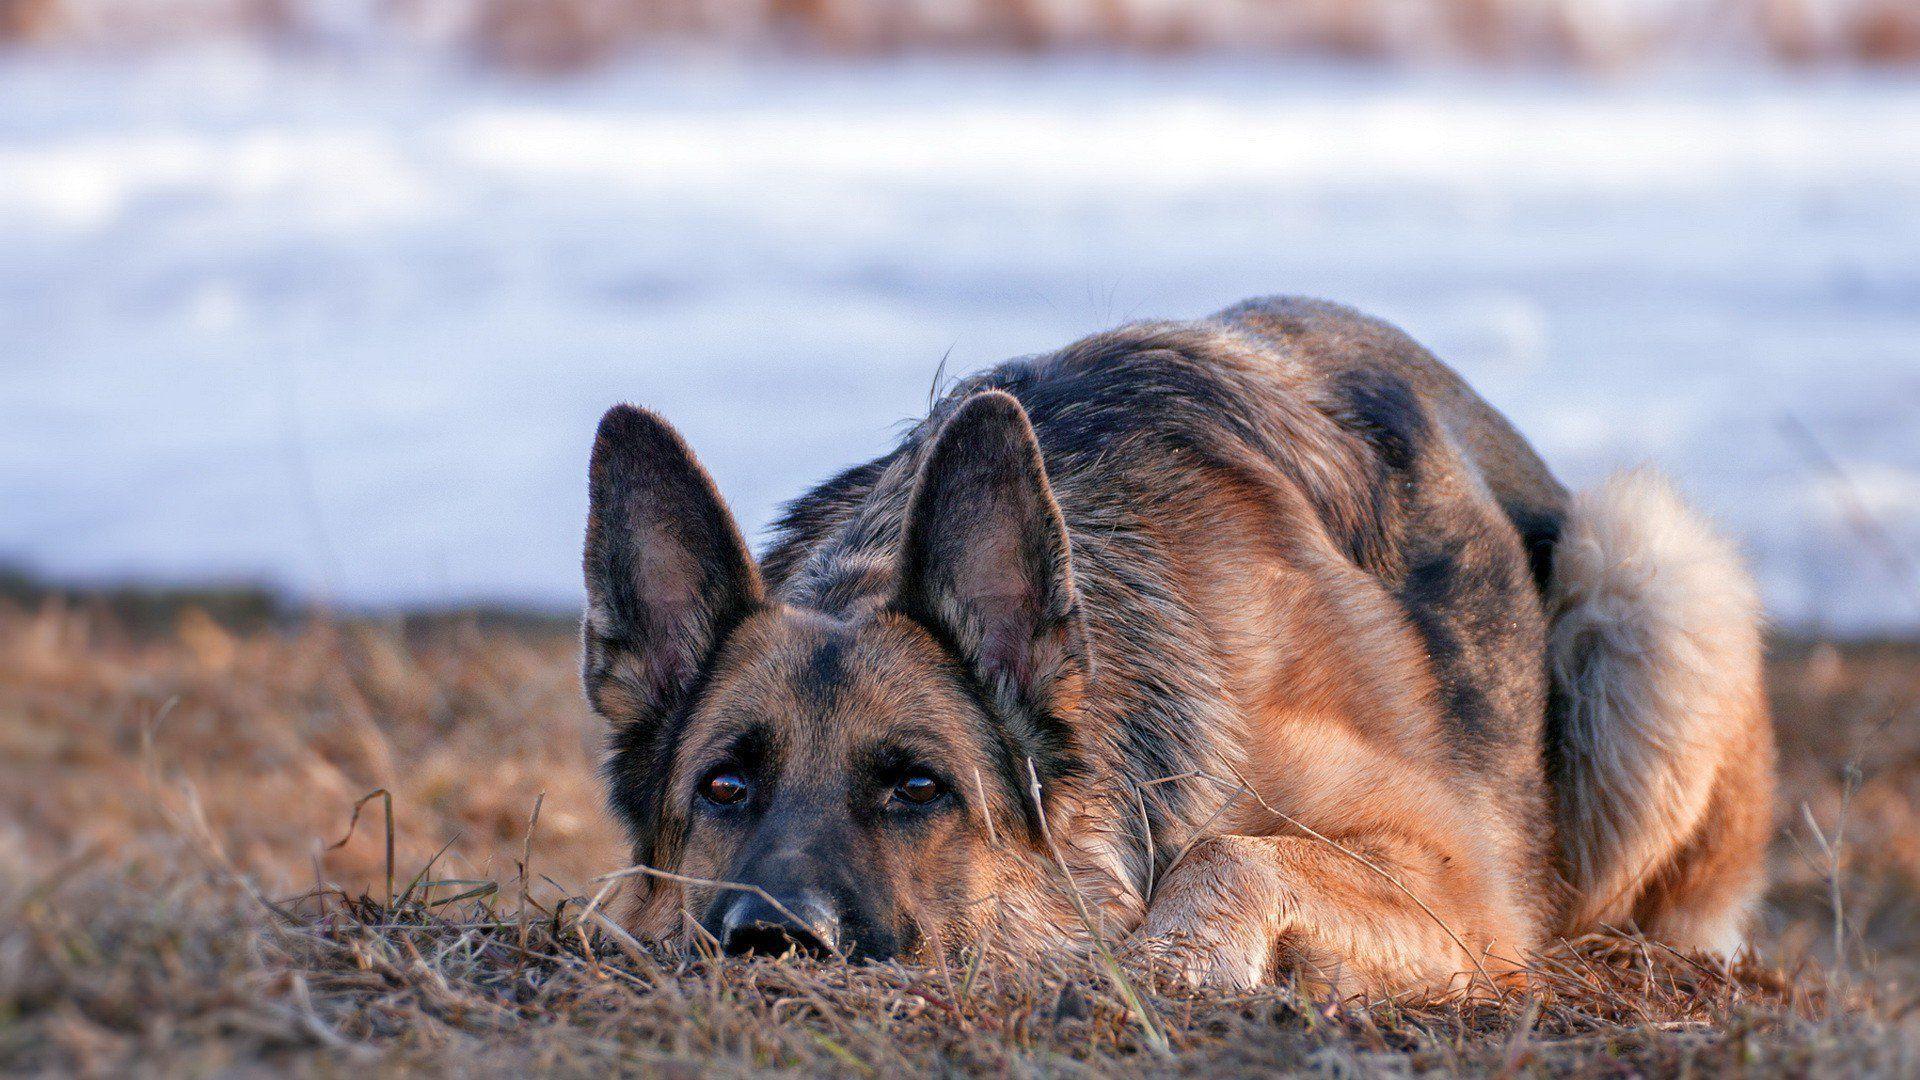 German Shepherd Dog, HD Animals, 4k Wallpaper, Image, Background